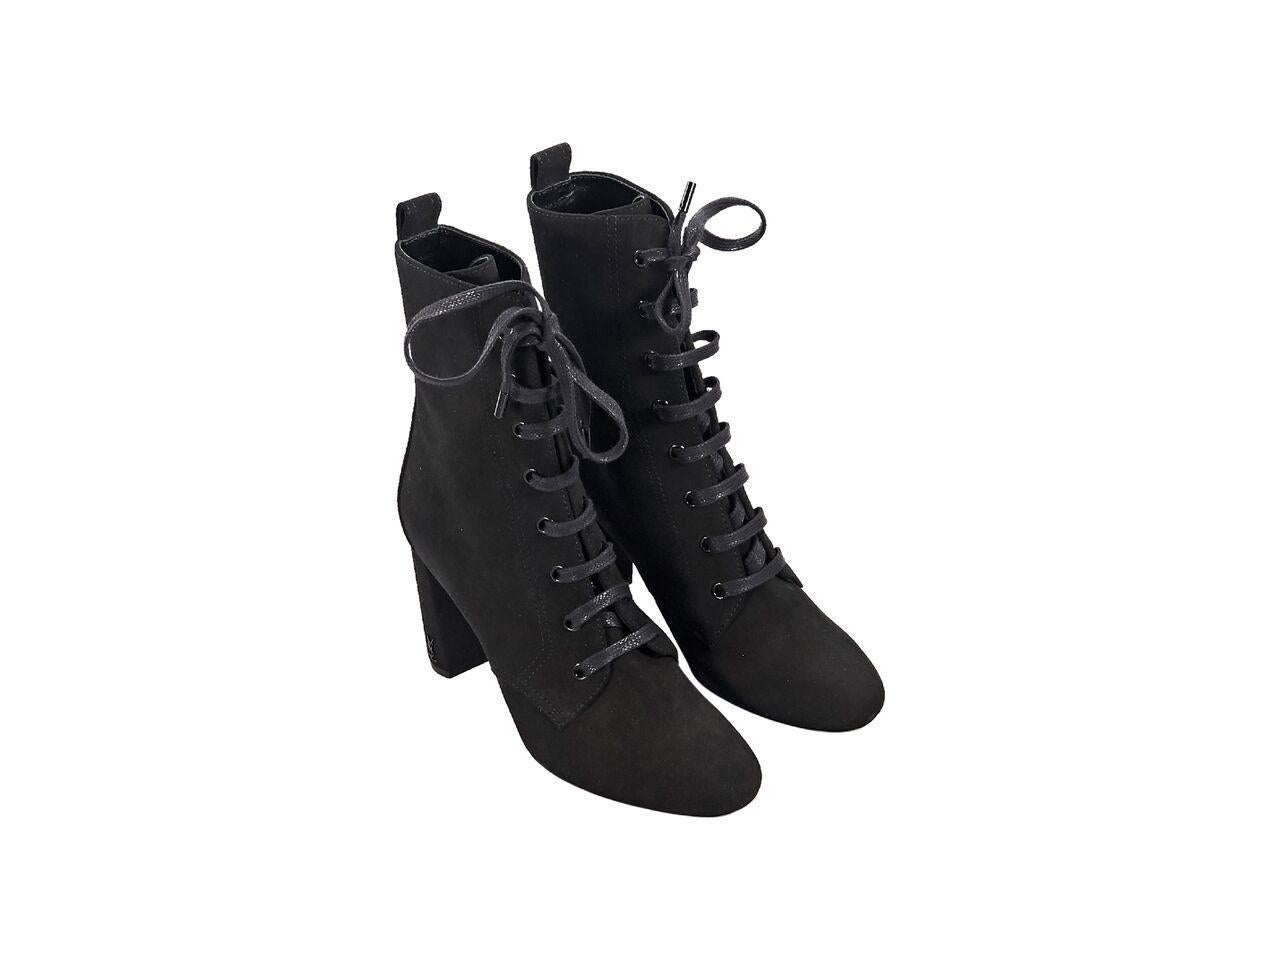 Product details:  Black suede ankle boots by Saint Laurent.  Lace-up front closure.  Round toe.  4